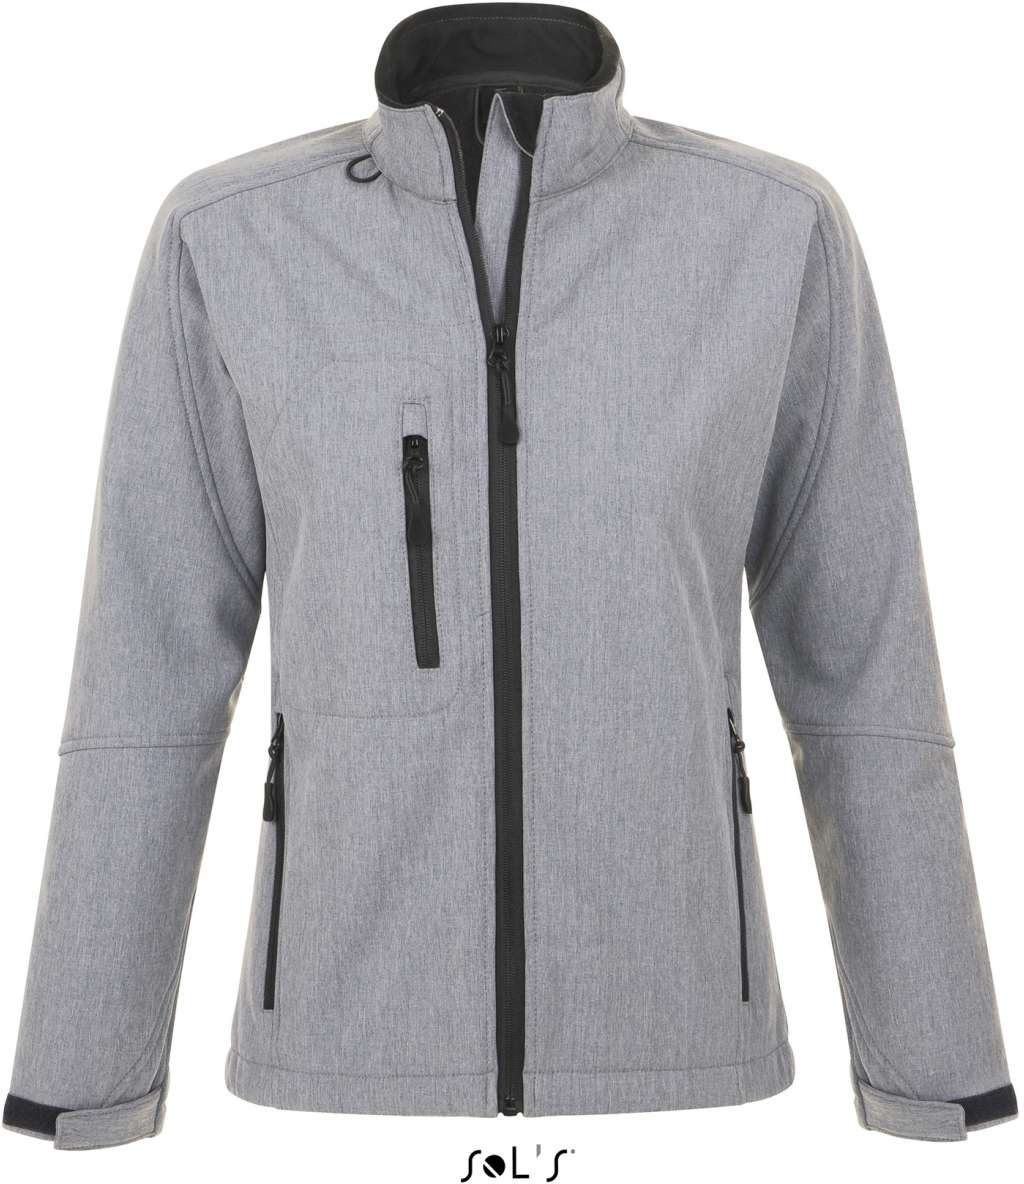 Sol's Roxy - Women's Softshell Zipped Jacket - grey